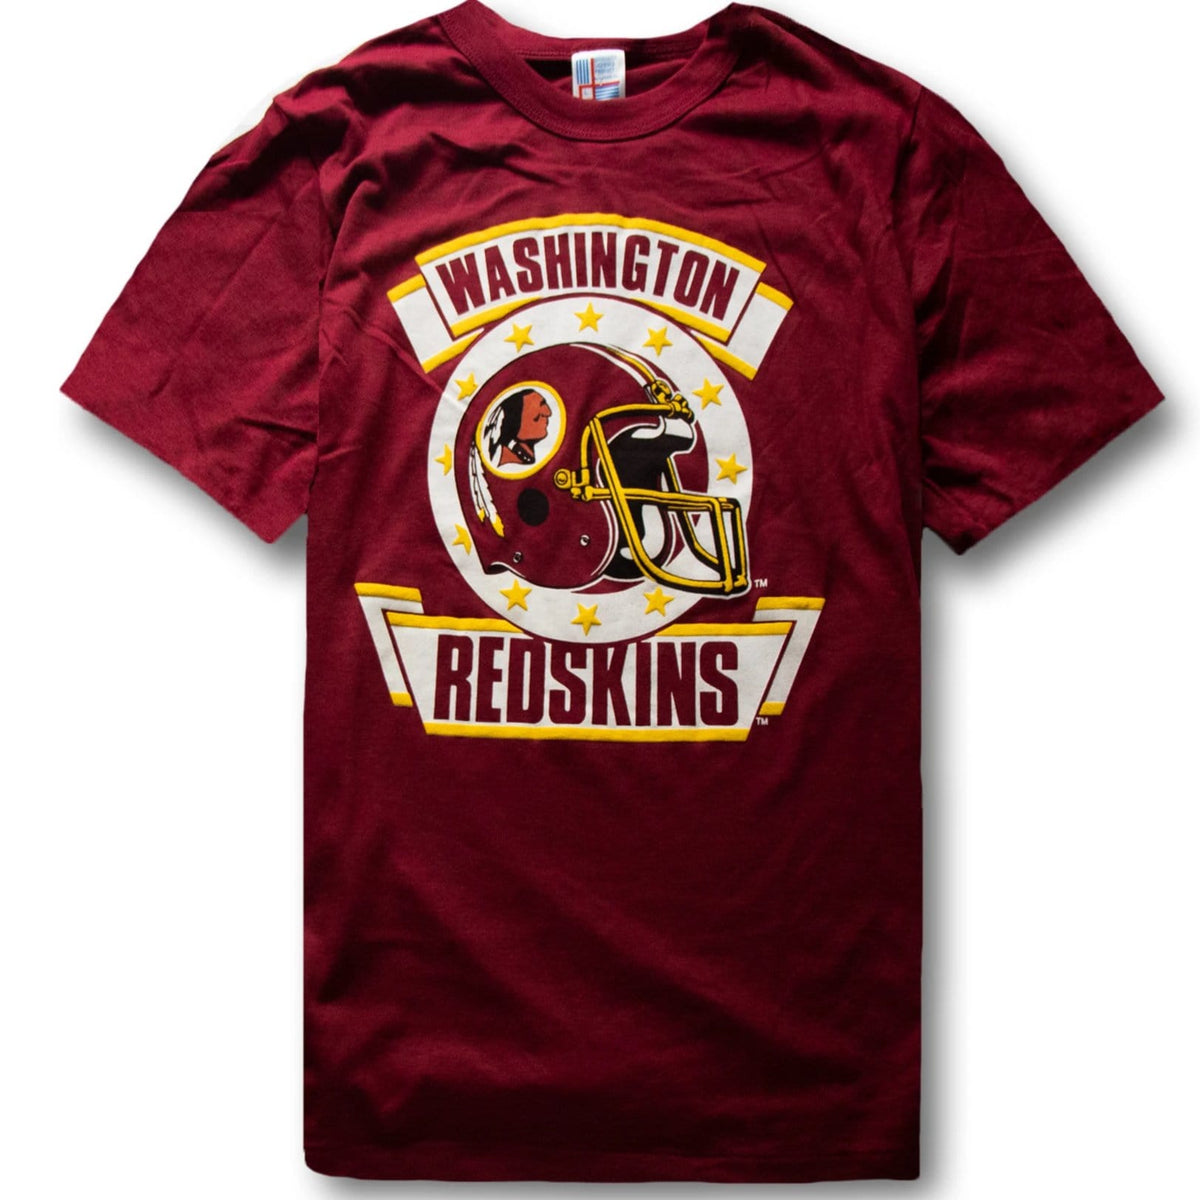 Vintage Washington Redskins T-Shirt 